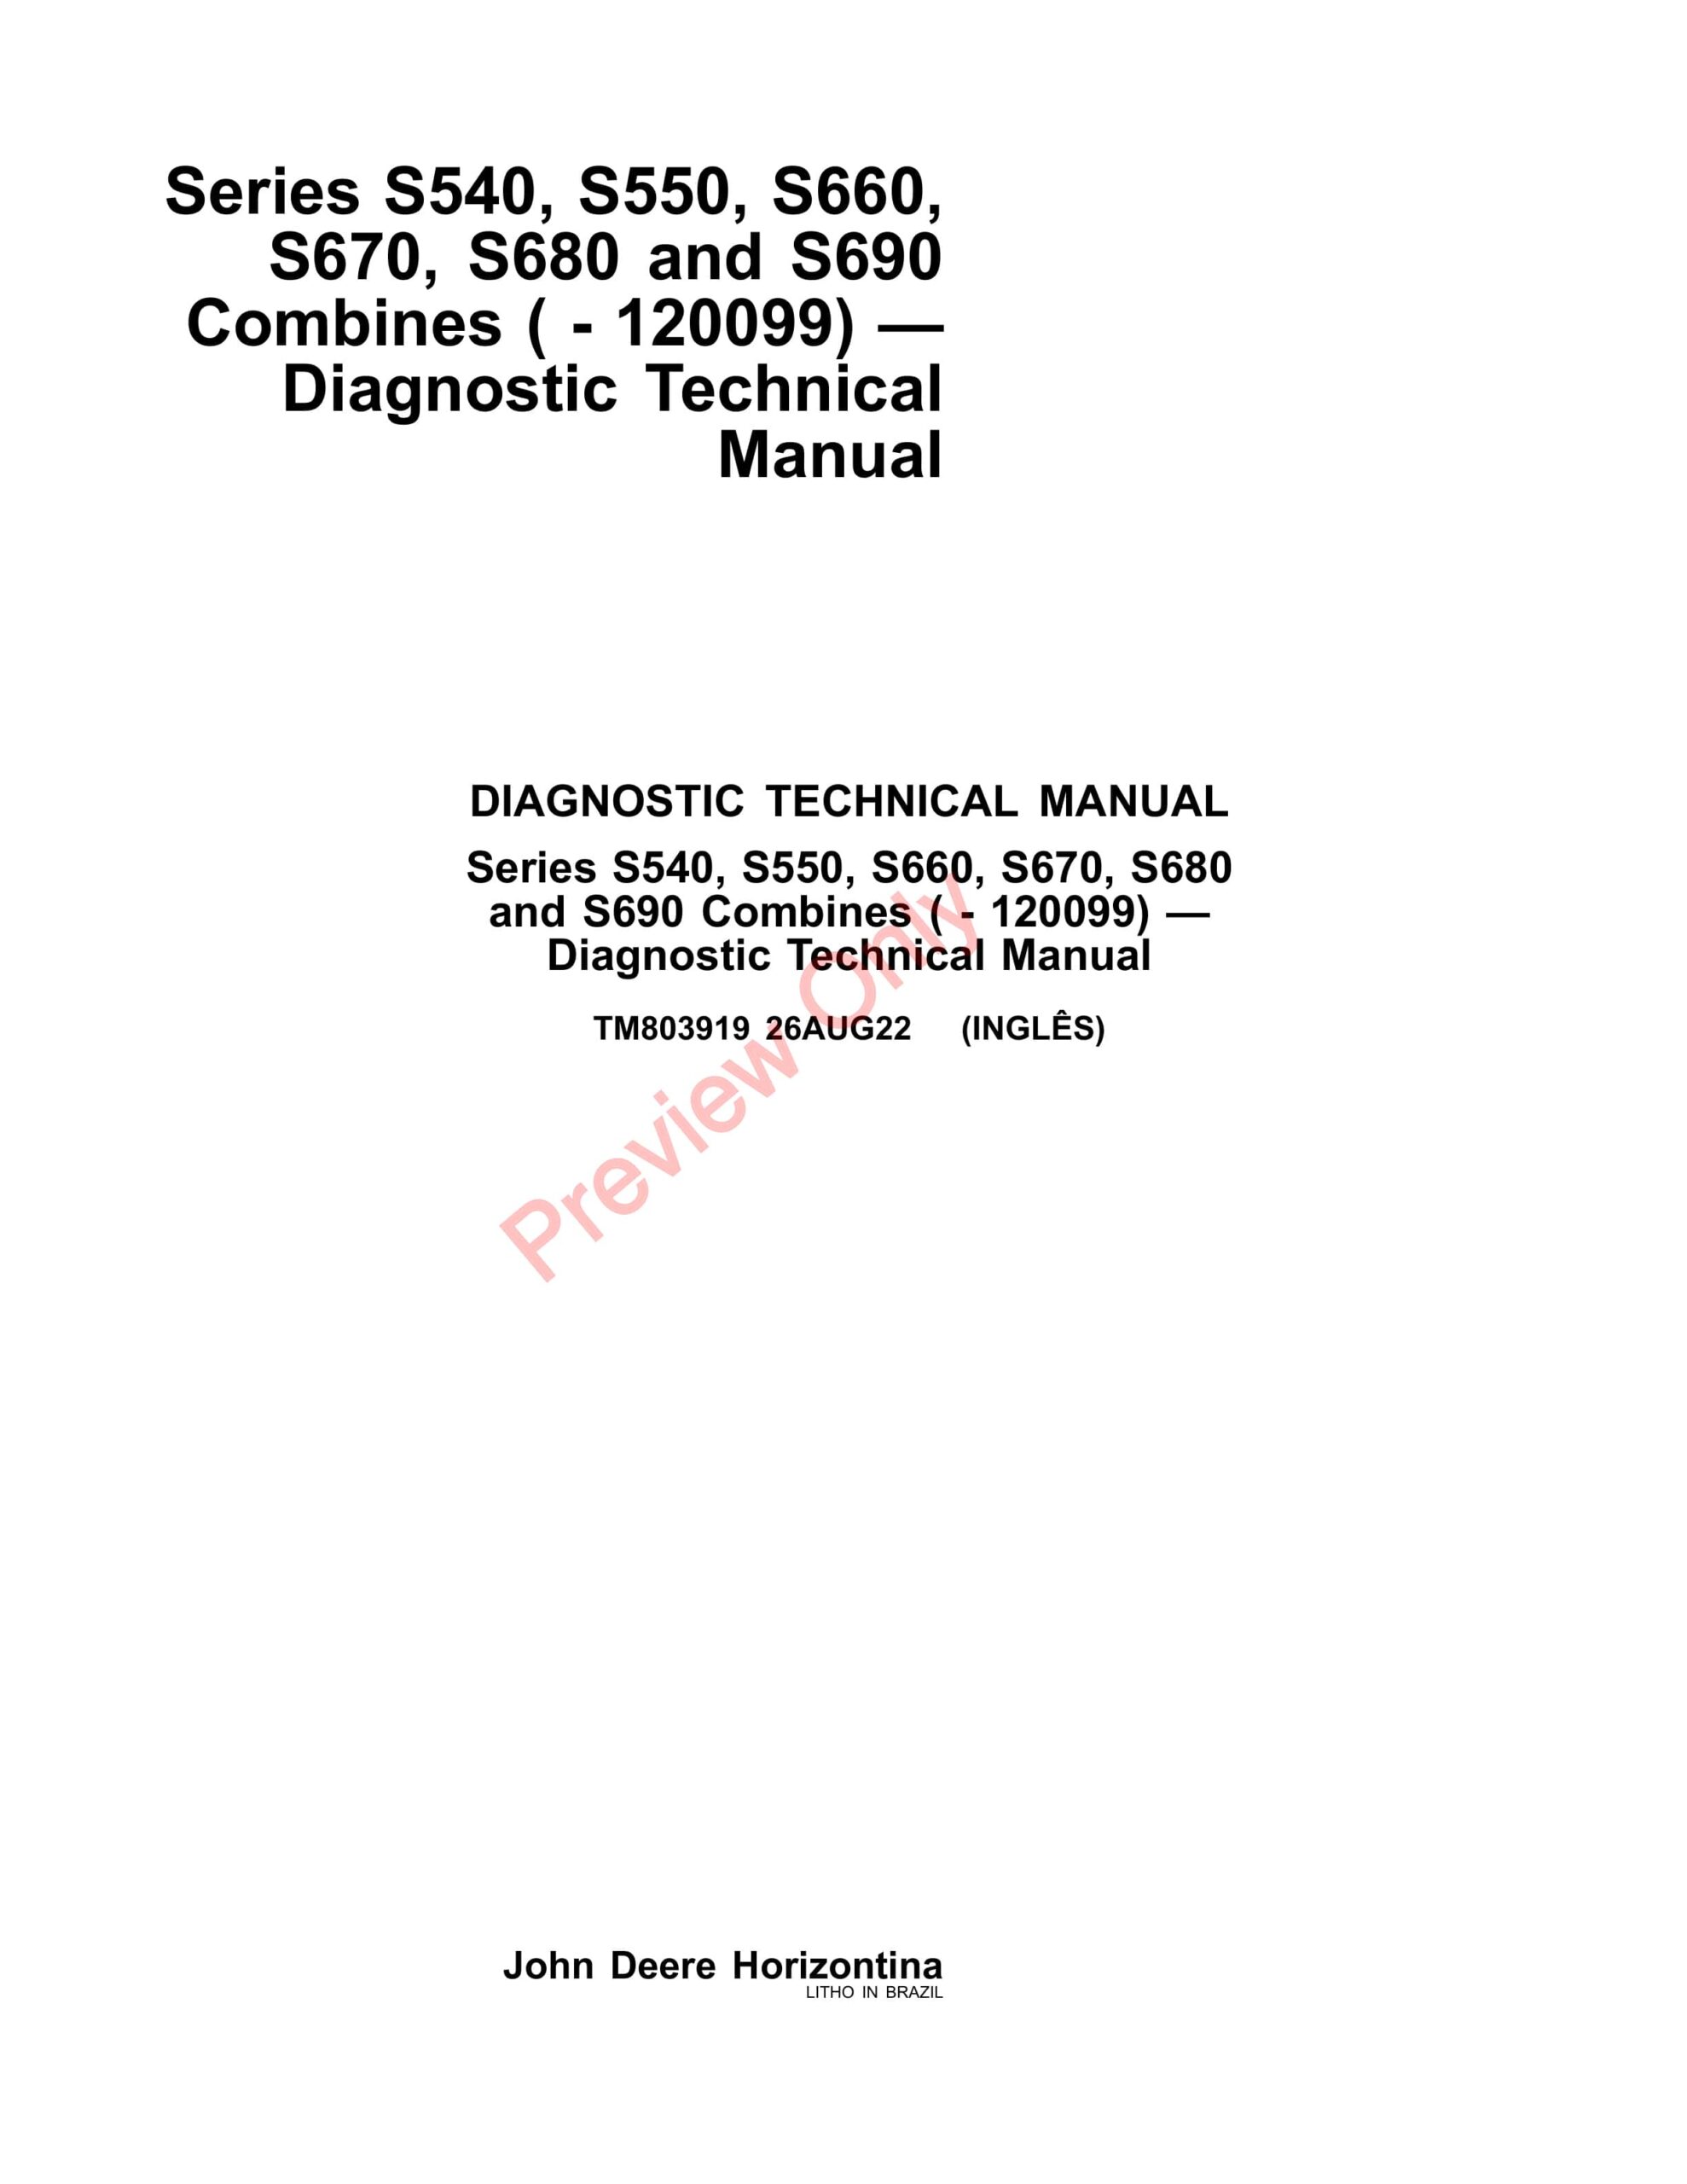 John Deere S540, S550, S660, S670, S680 and S690 Combines Diagnostic Technical Manual TM803919 26AUG22-1